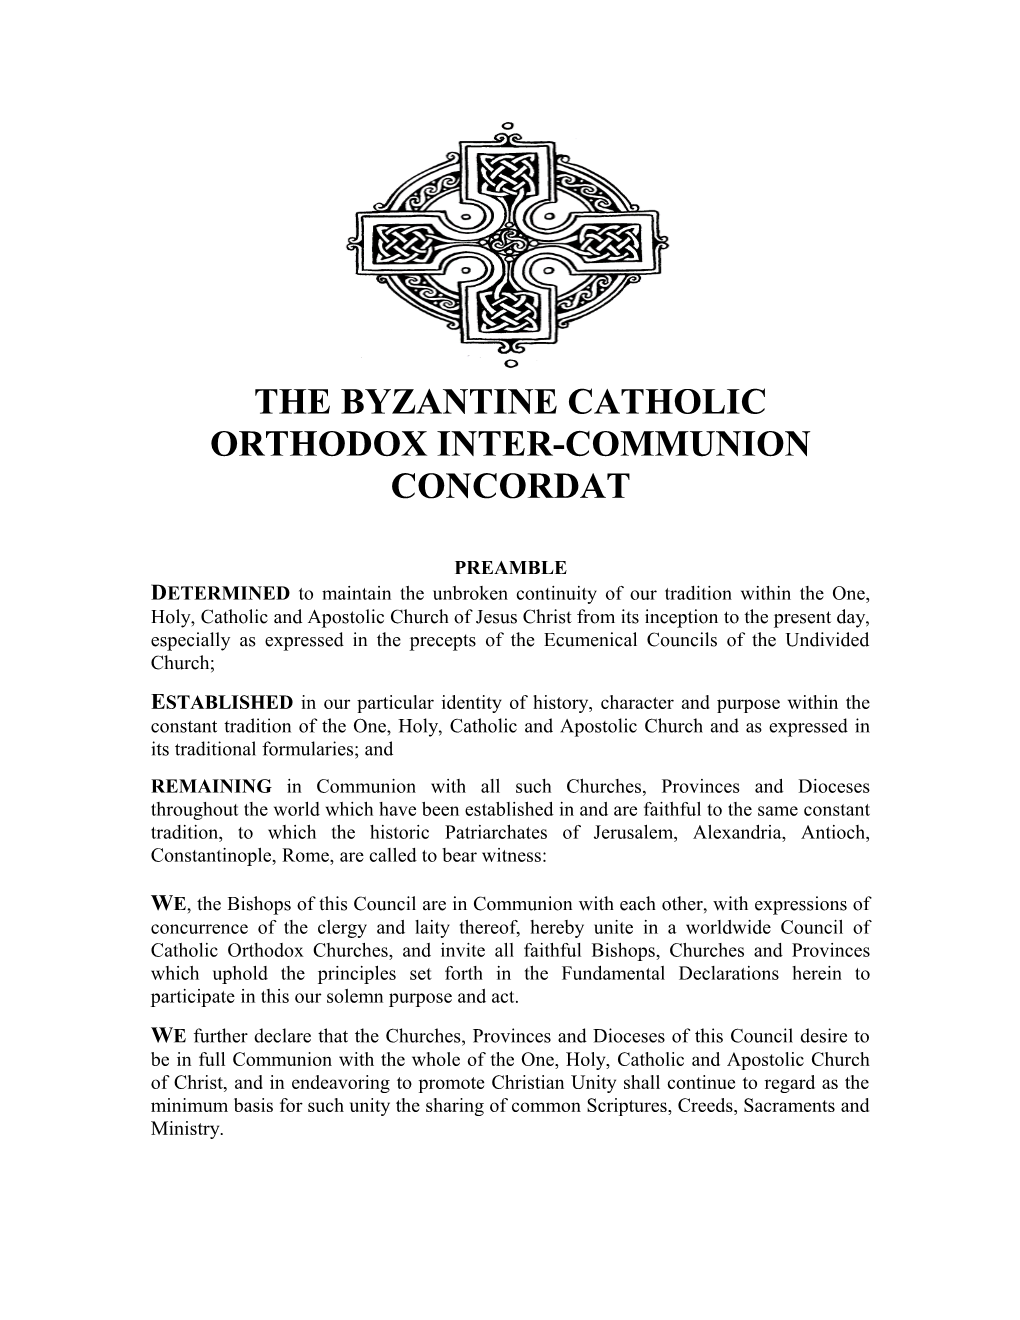 The Byzantine Catholic Orthodox Inter-Communion Concordat